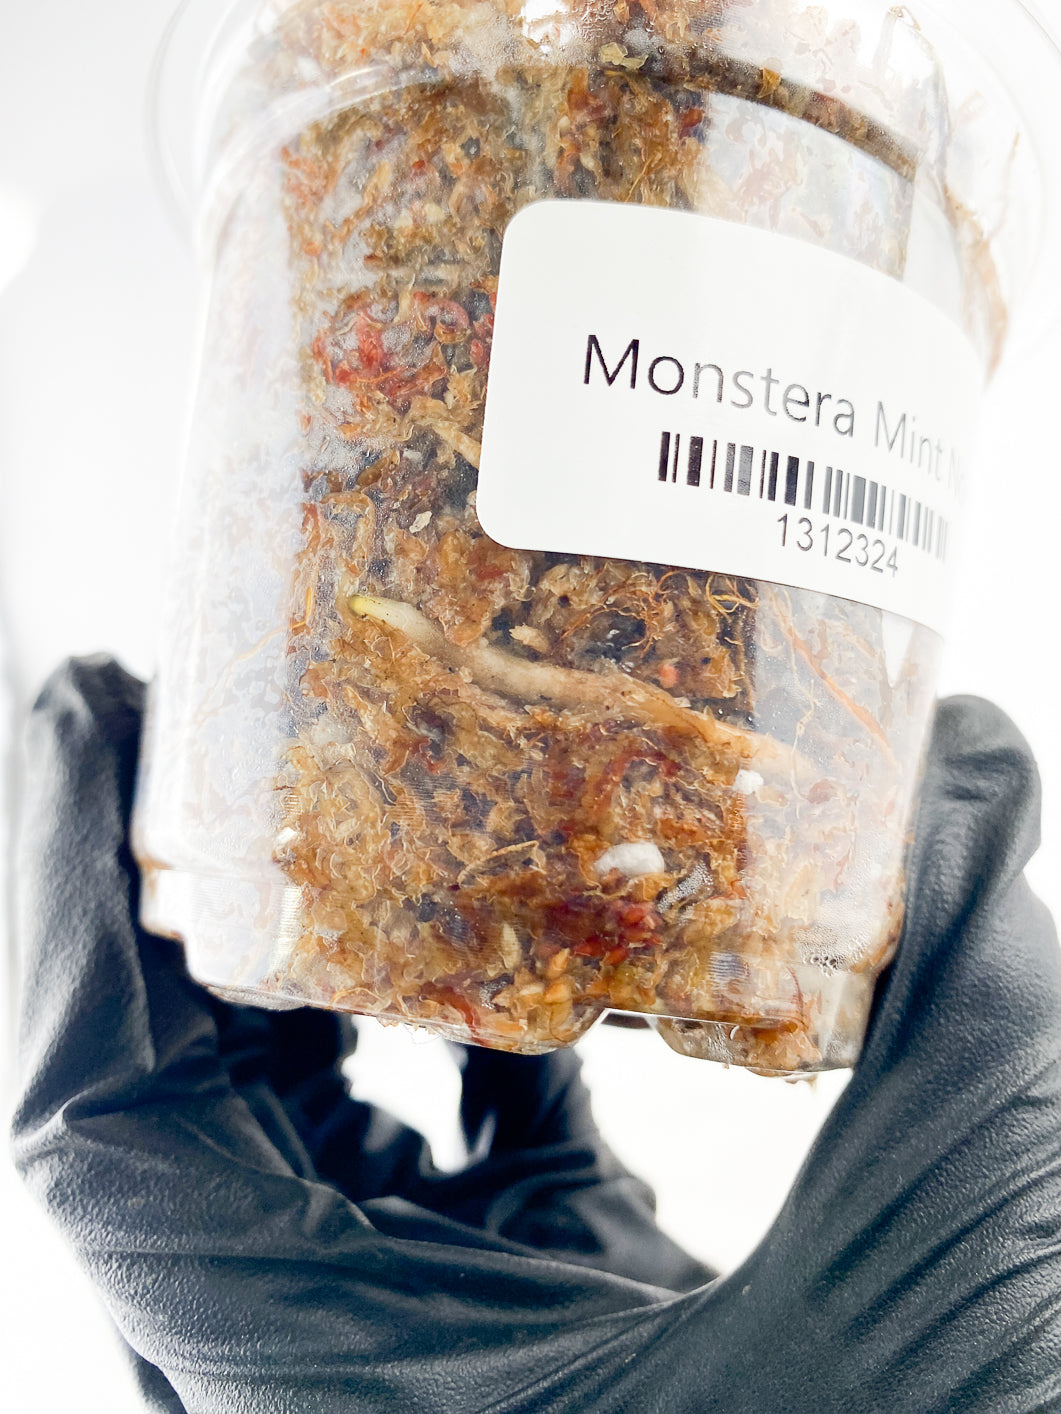 Monstera Mint Noid 2 leaves rooting in moss